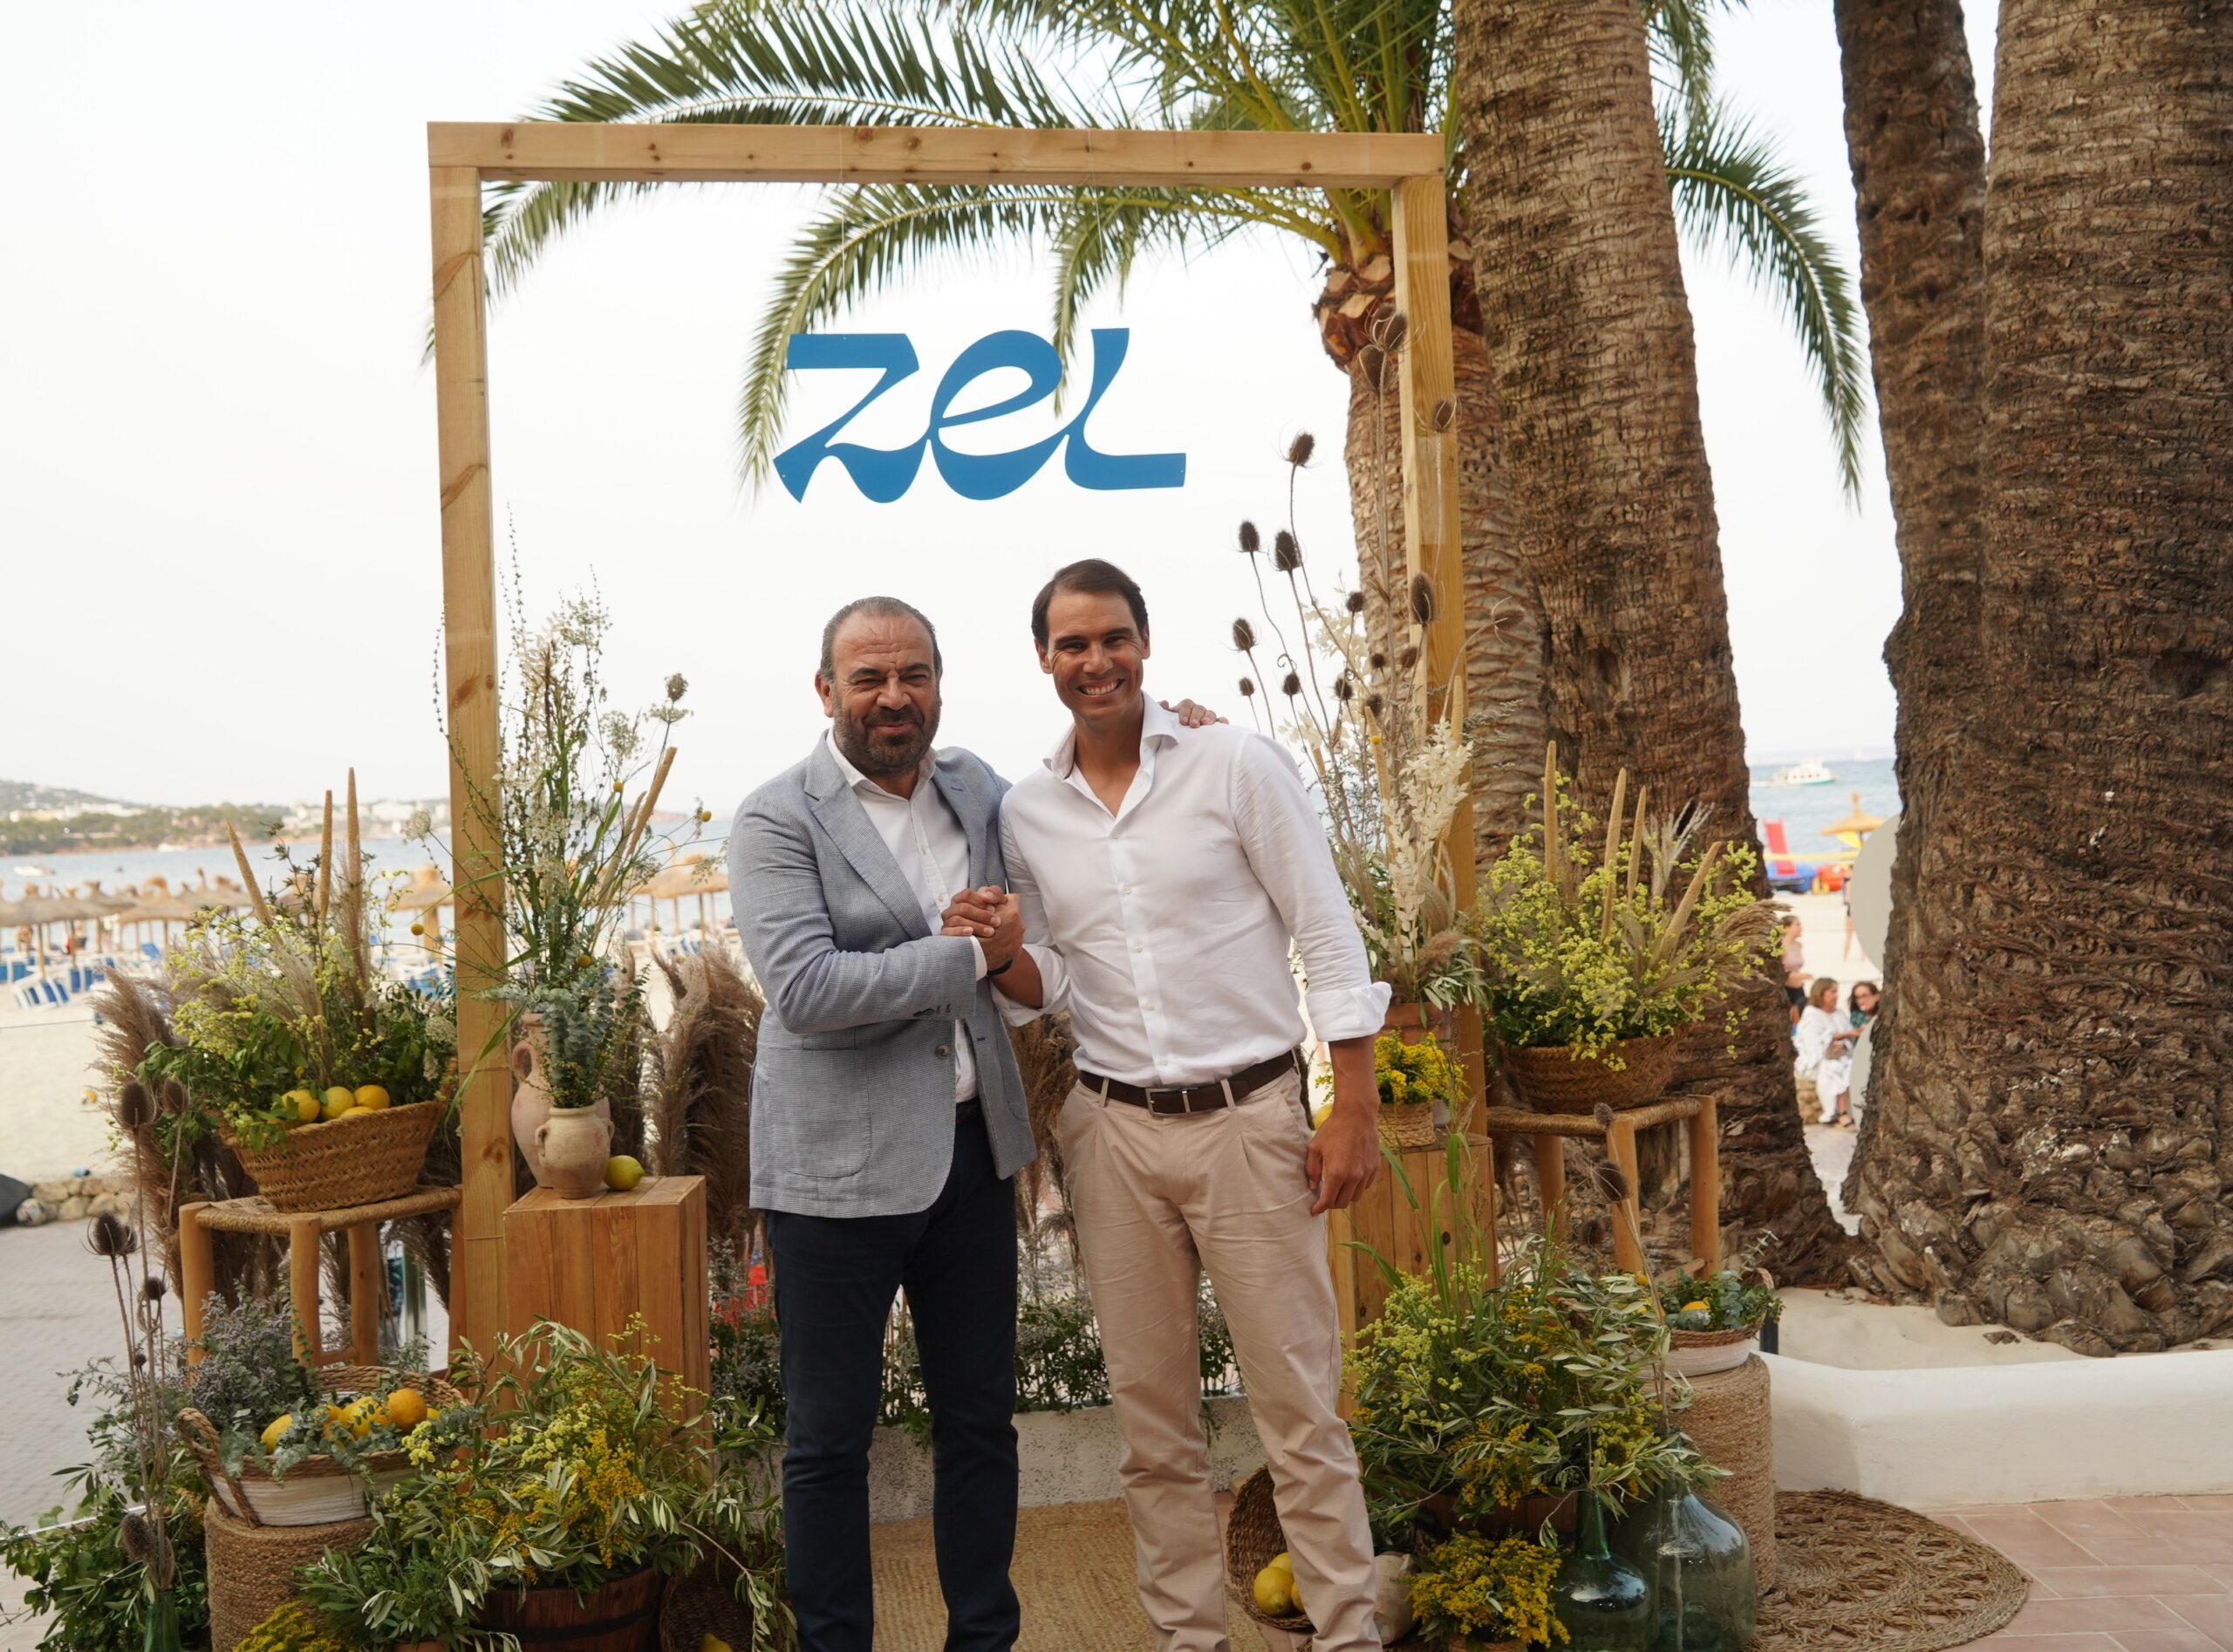 ZEL Mallorca se inauguró con una gran fiesta mediterránea